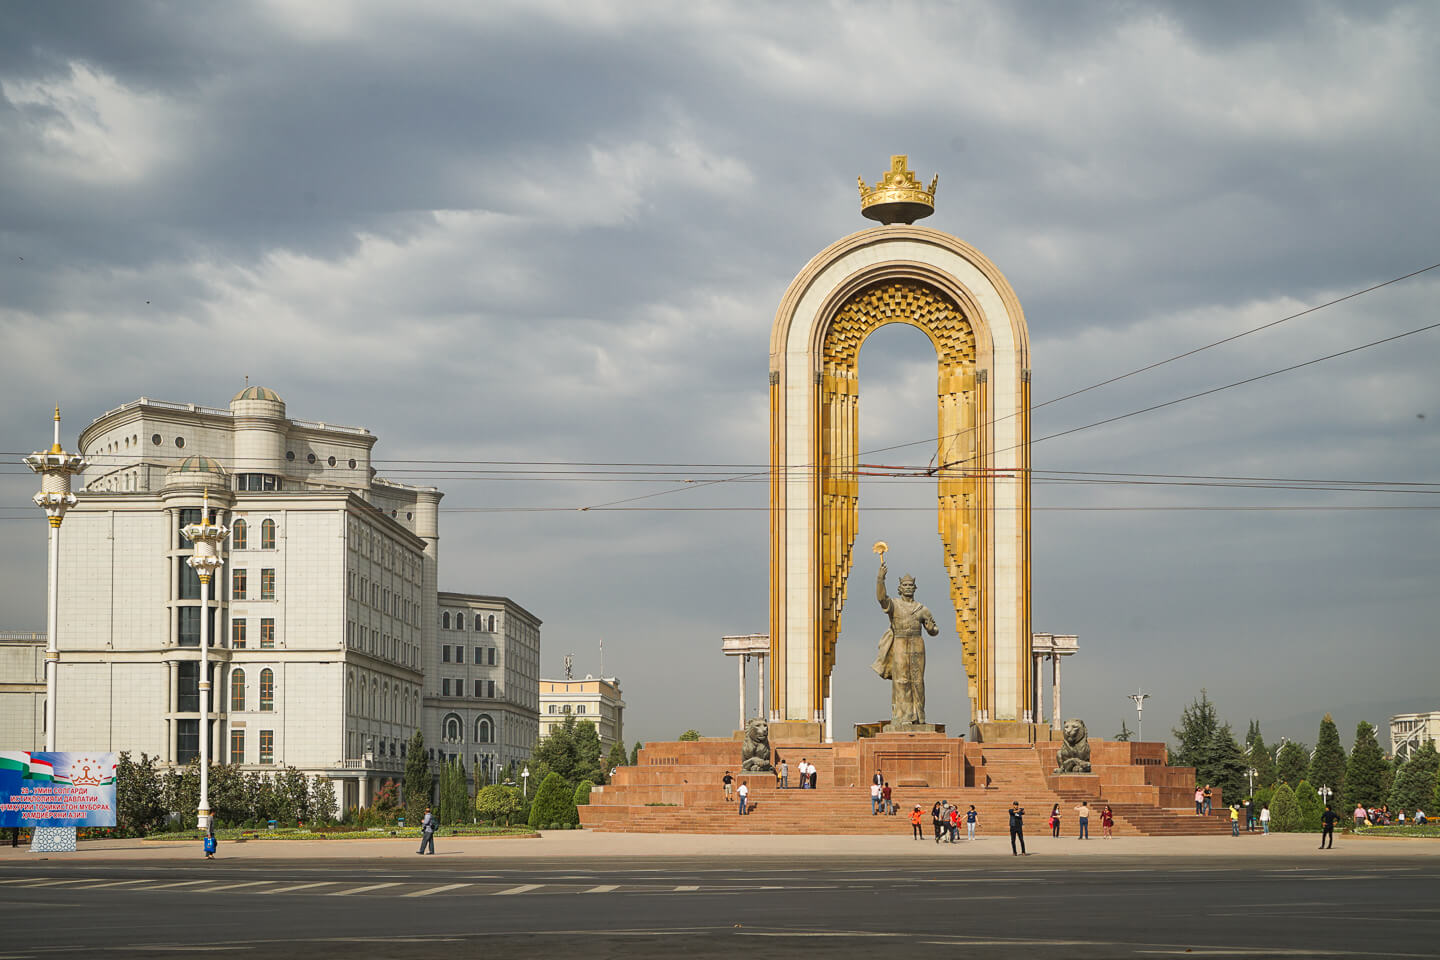 Dushanbe, the capital city of Tajikistan